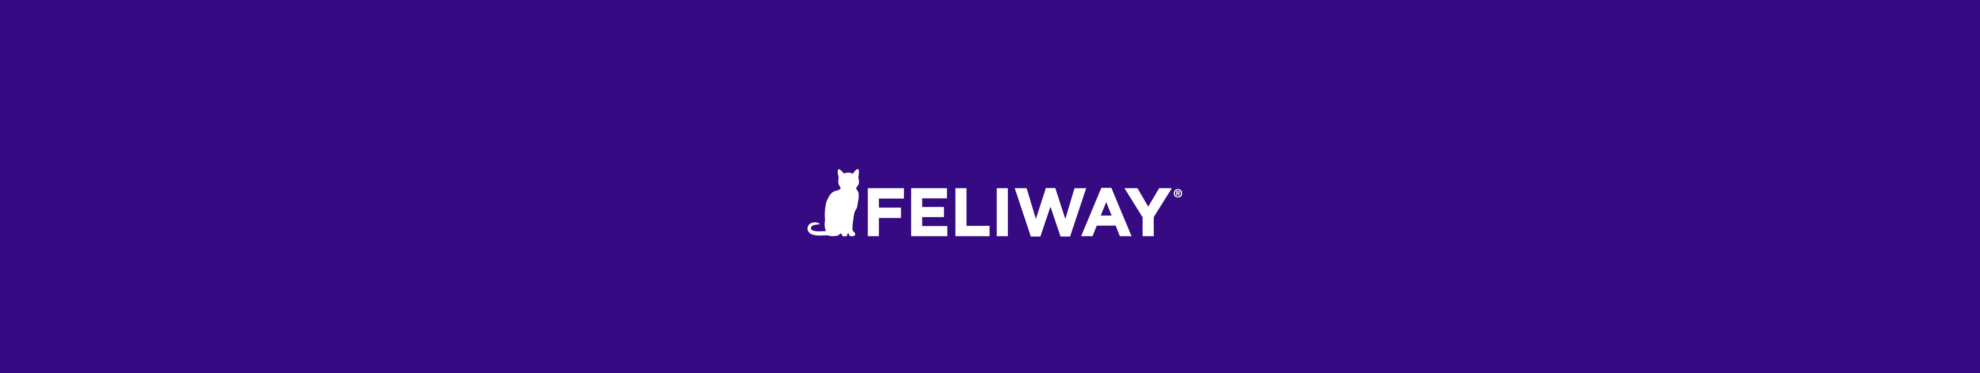 Purple Cat Head Company Logo - Feliway for cats